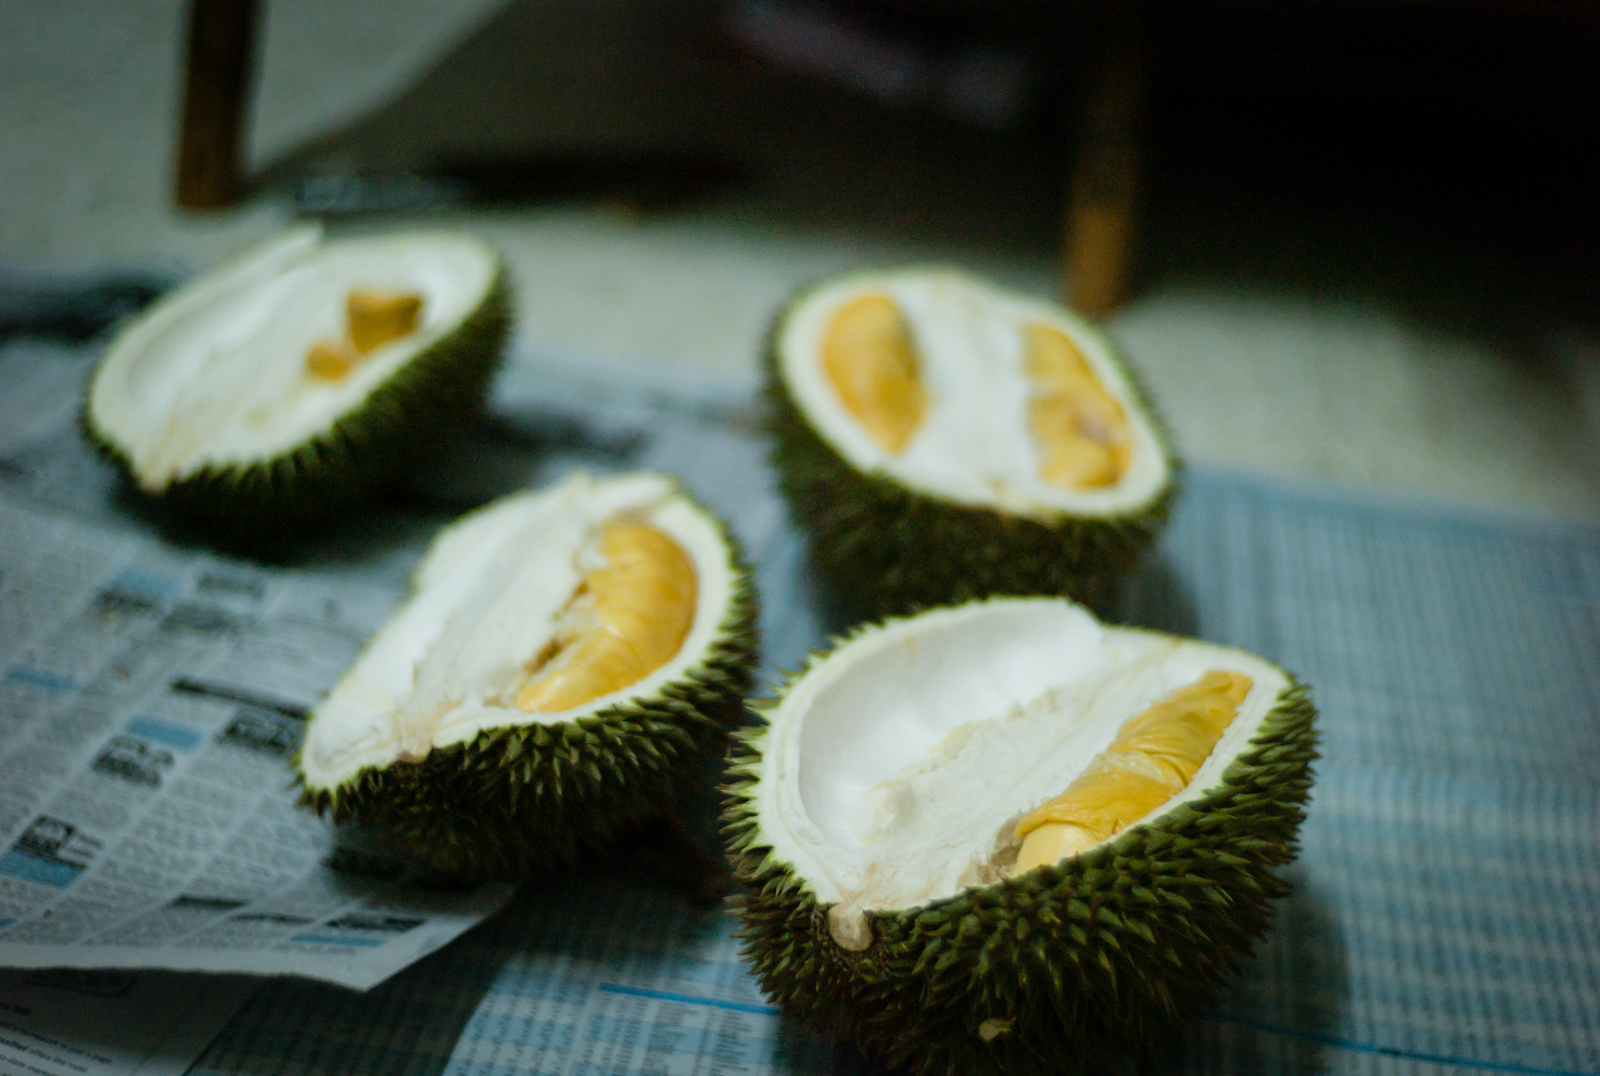 Delicious durians